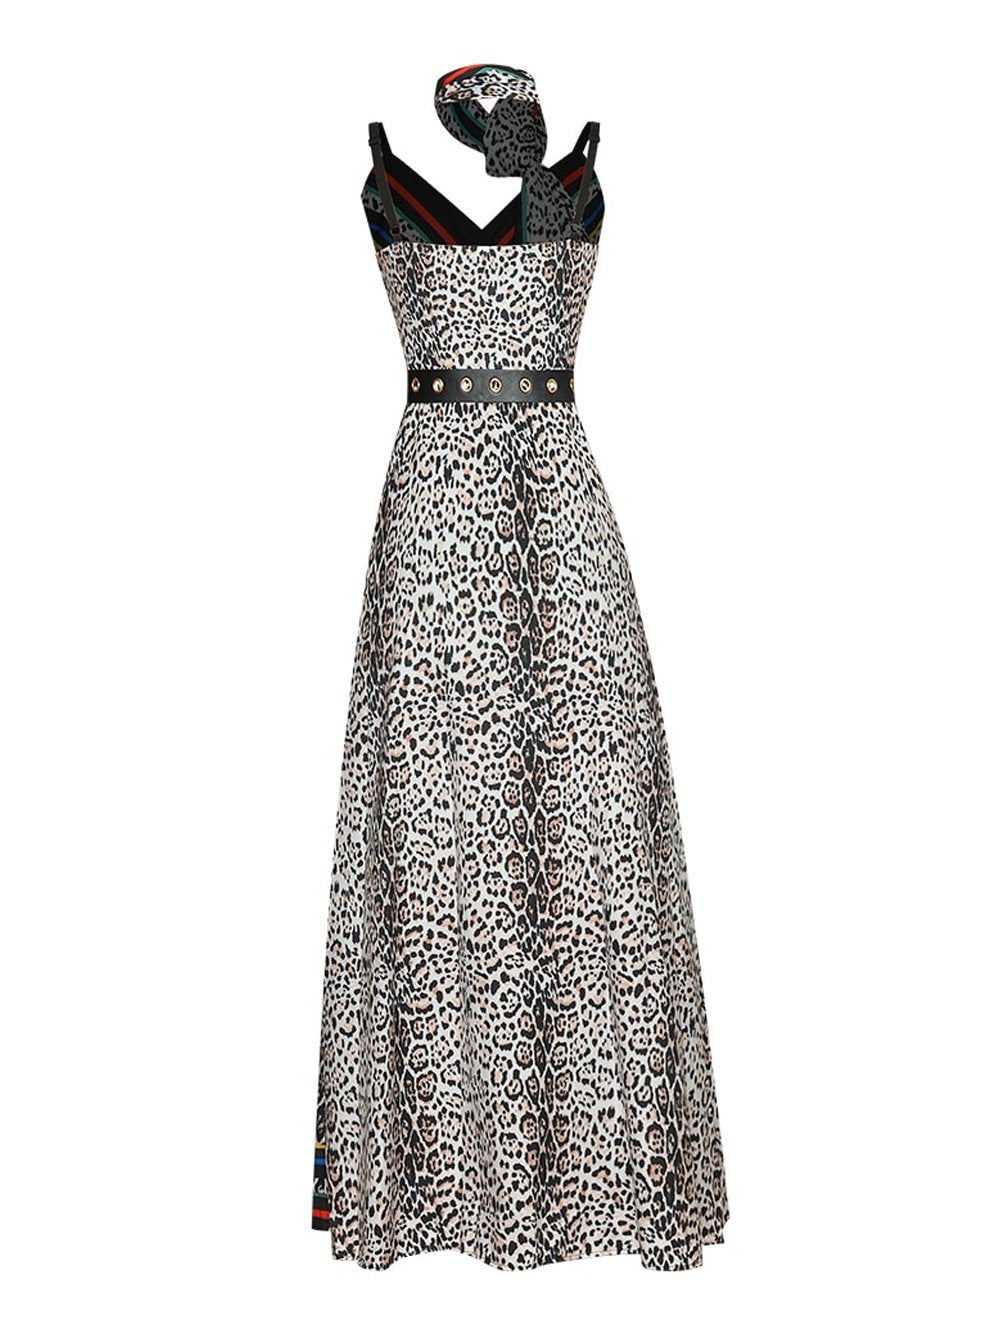 KELLE Leopard Maxi Dress